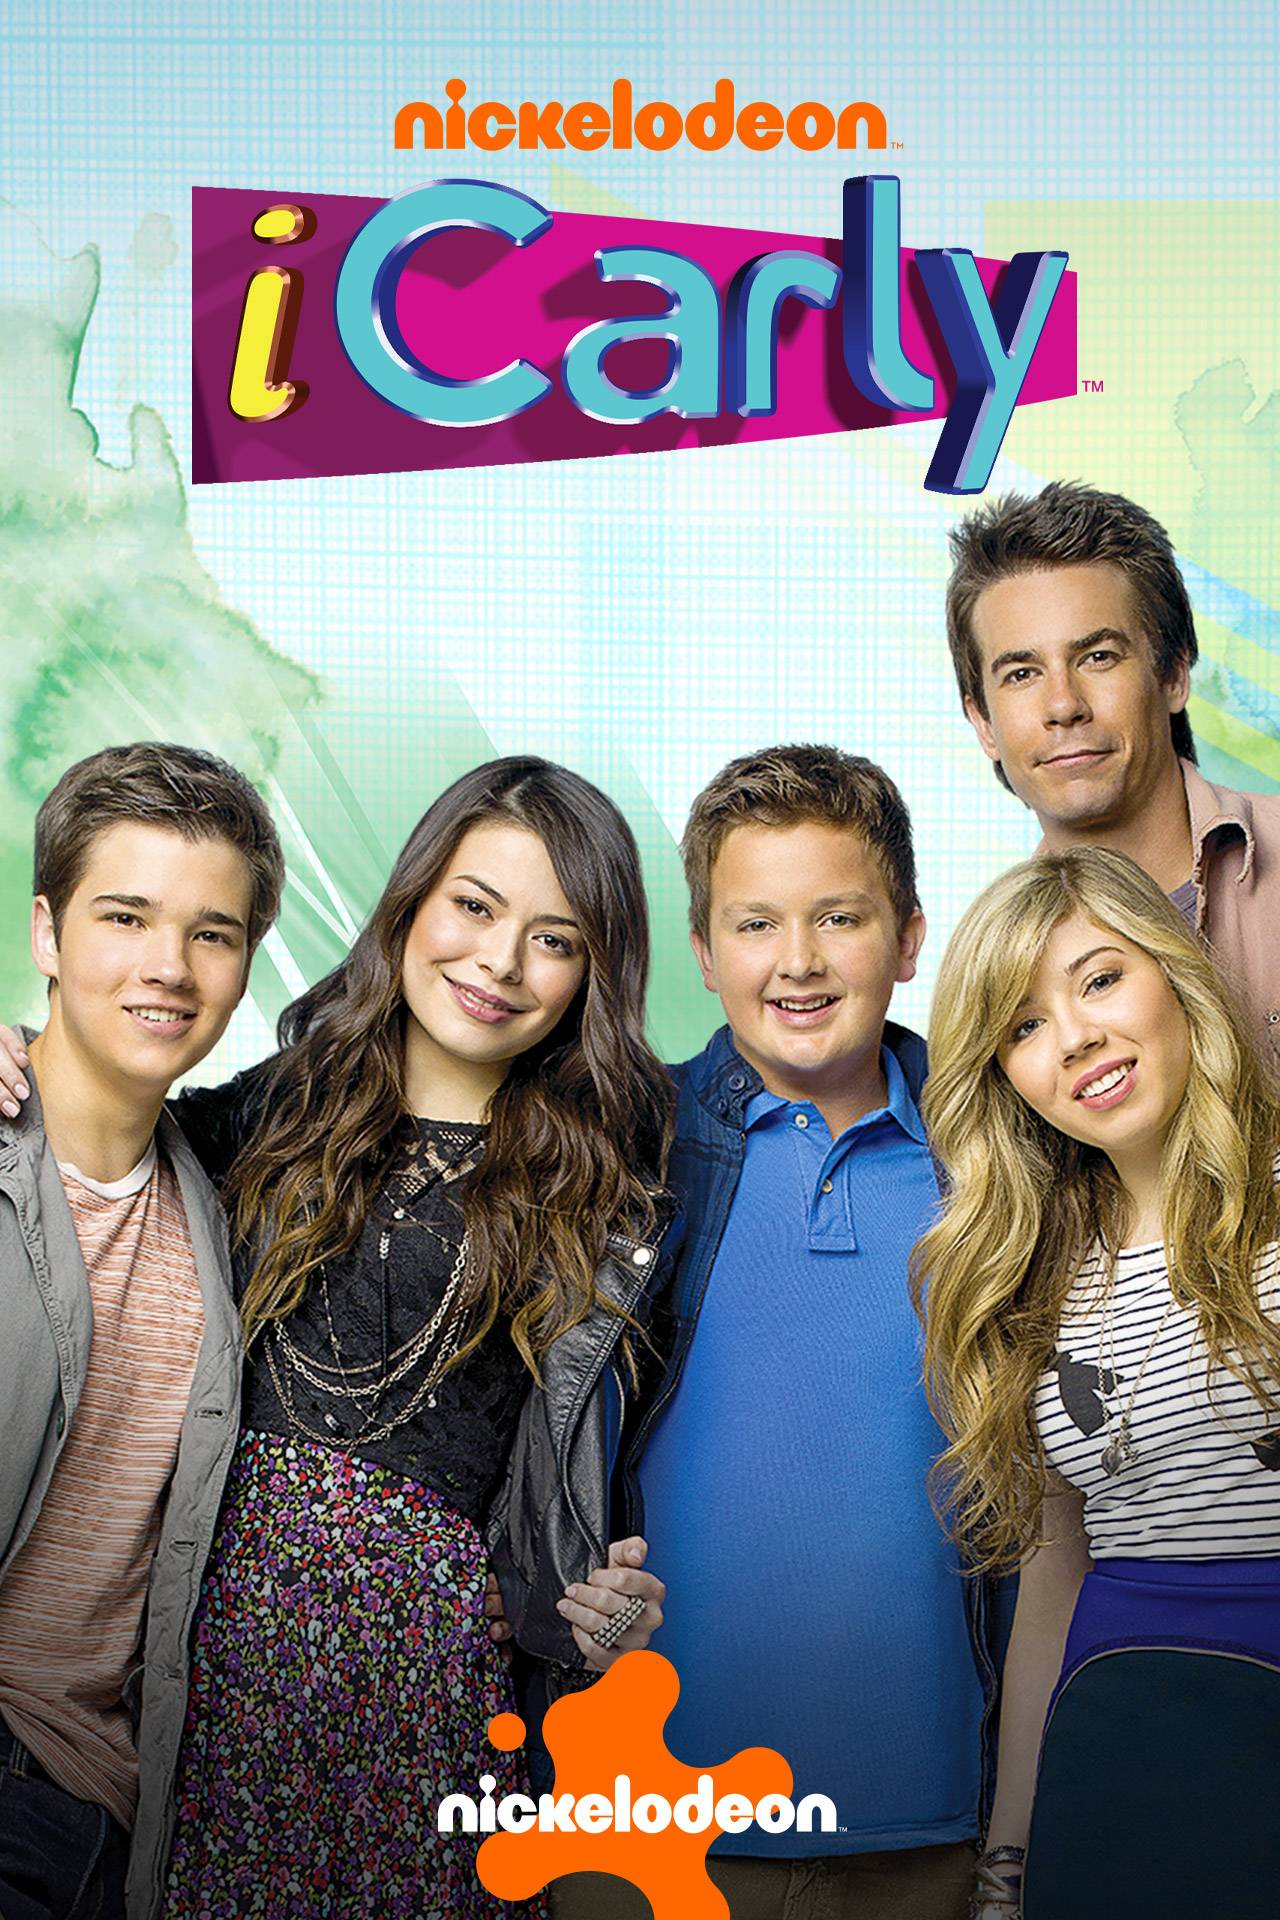 iCarly: Season 4